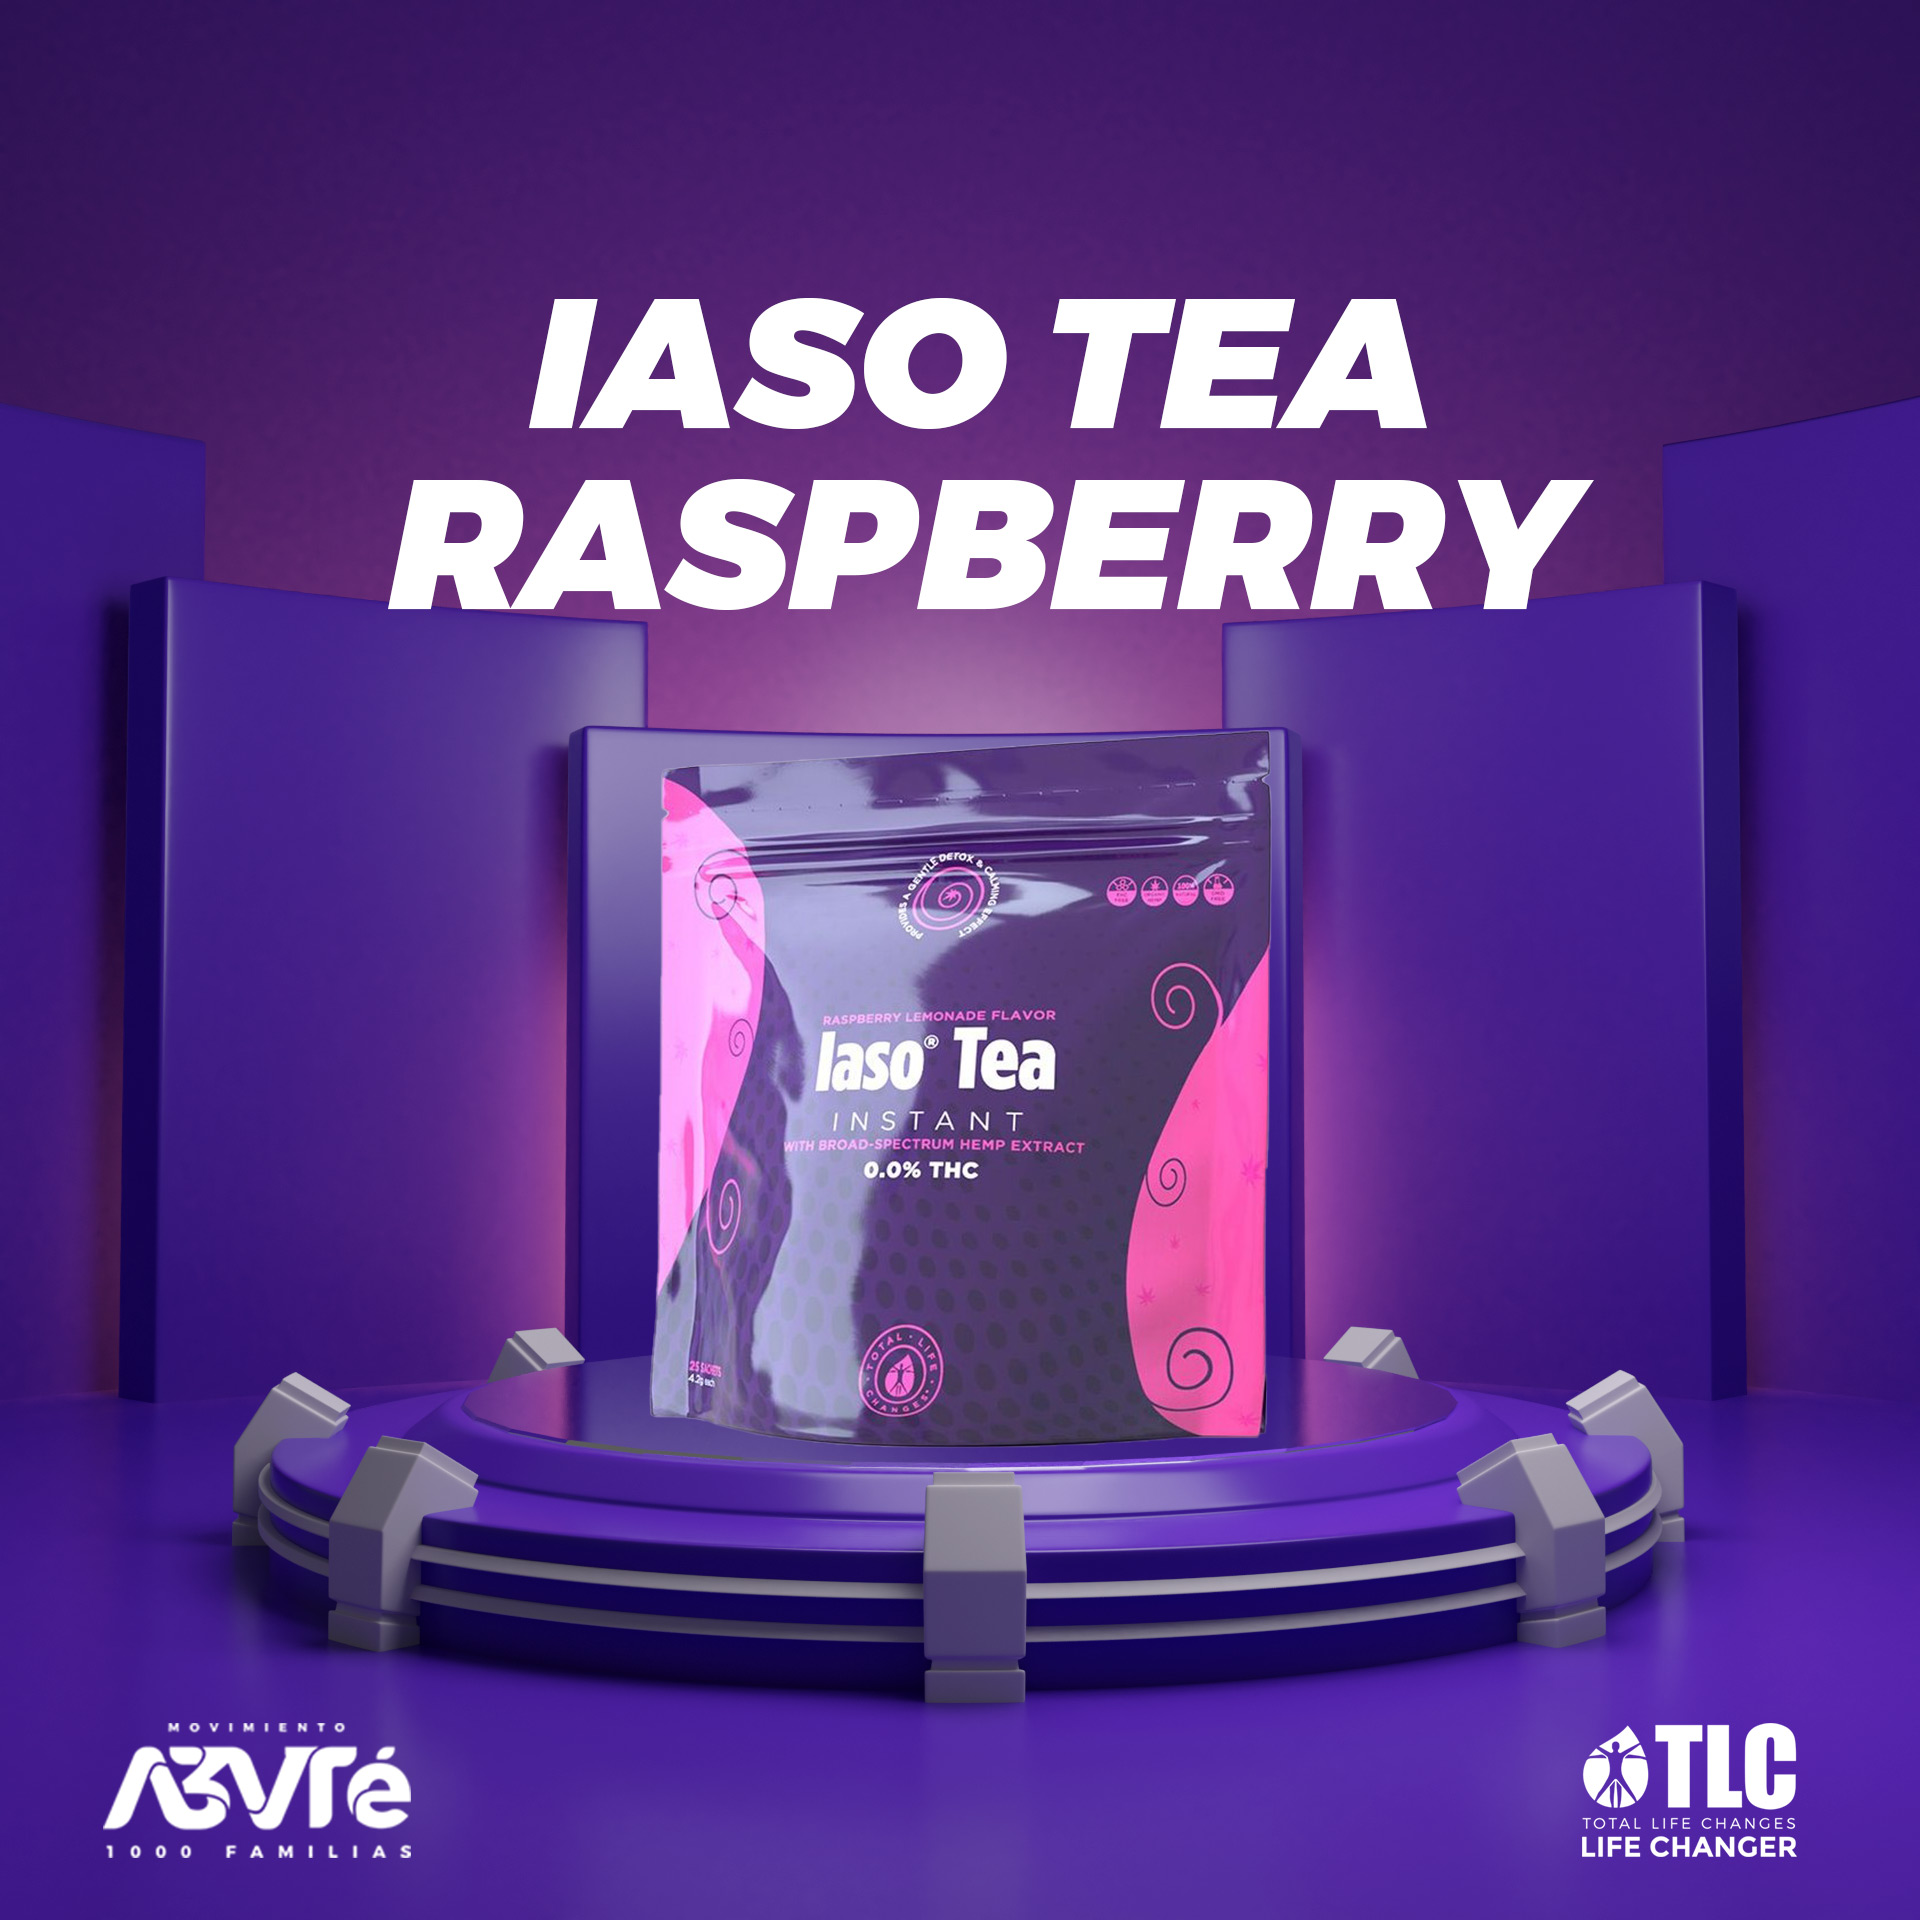 Iaso Tea Raspberry